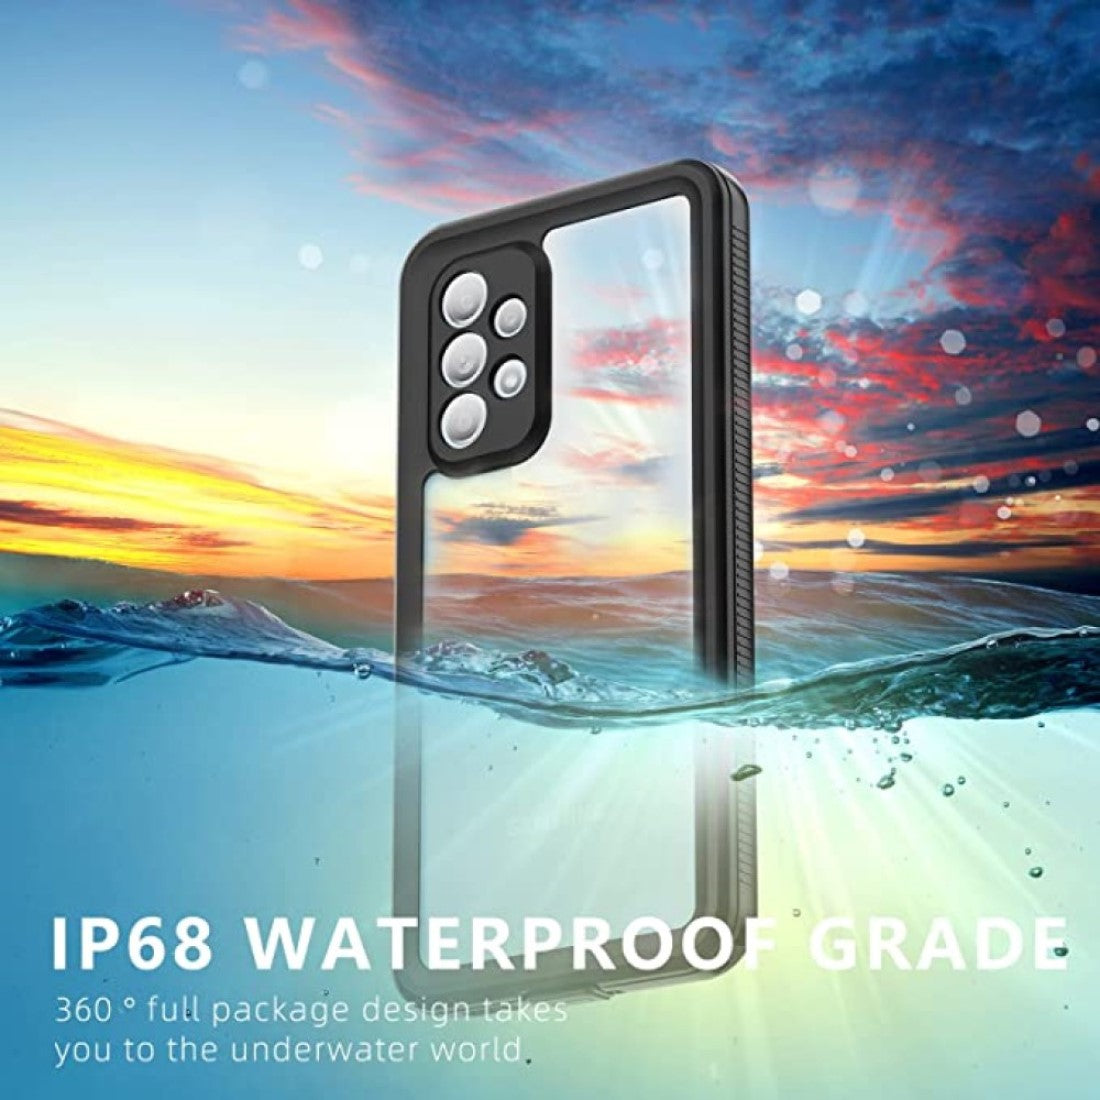 Waterproof Slim Life Proof Case for Samsung S21 Plus Built-in Screen Protector Shockproof Dustproof Heavy Duty Full Body Protective Case